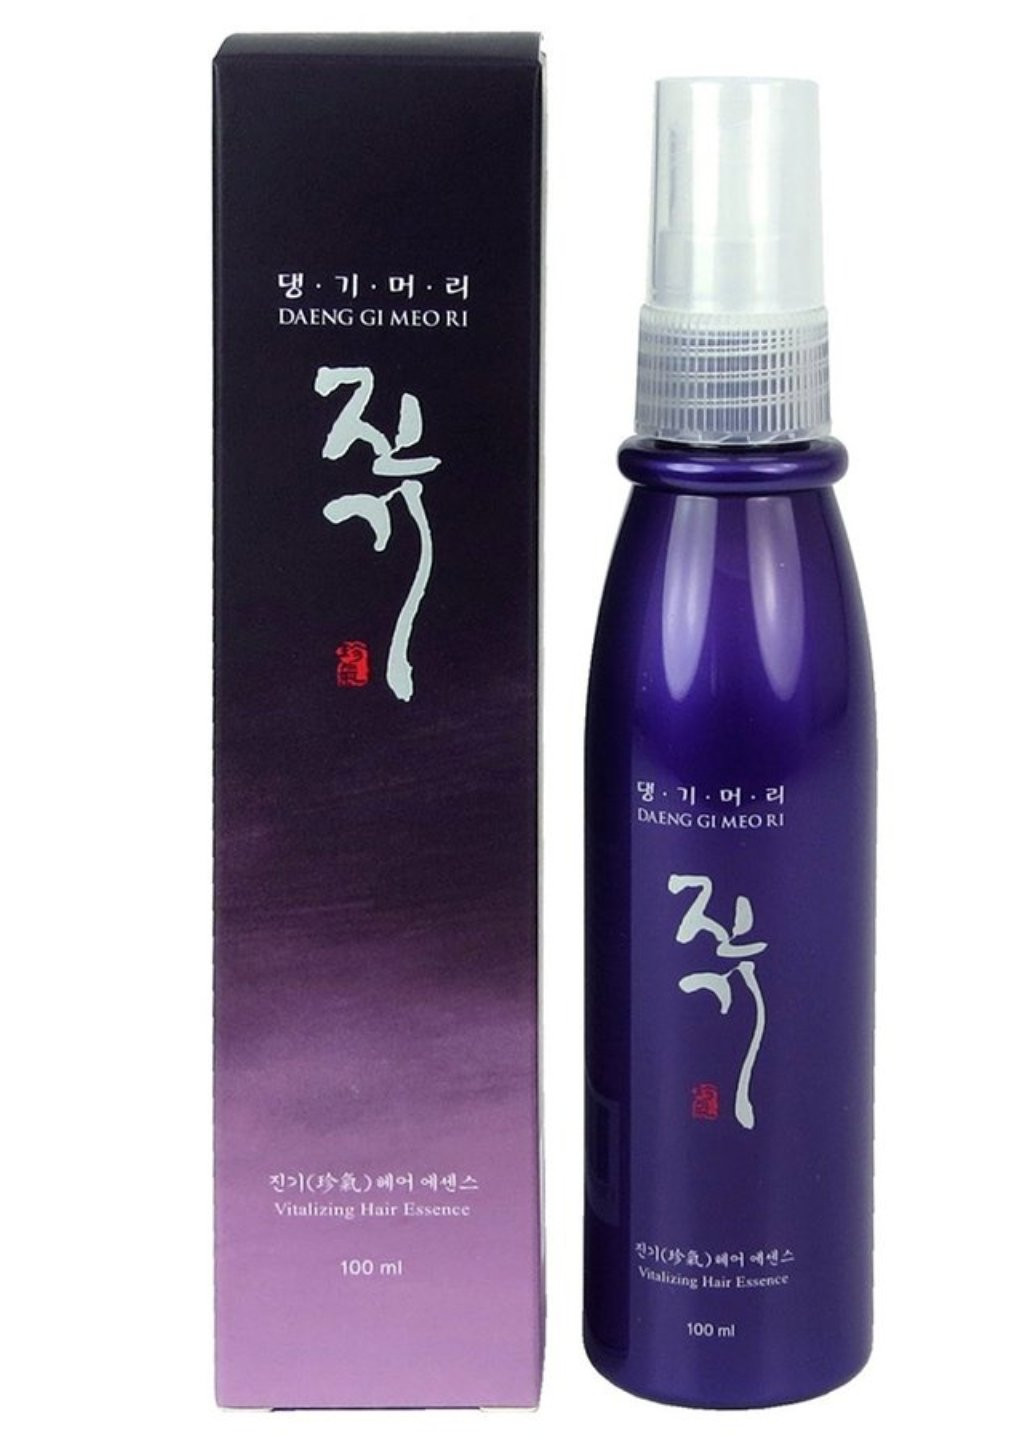 Виталайзинг-эссенция Vitalizing Hair Essence для волос увлажняющая, 100 мл Daeng Gi Meo Ri (219905431)